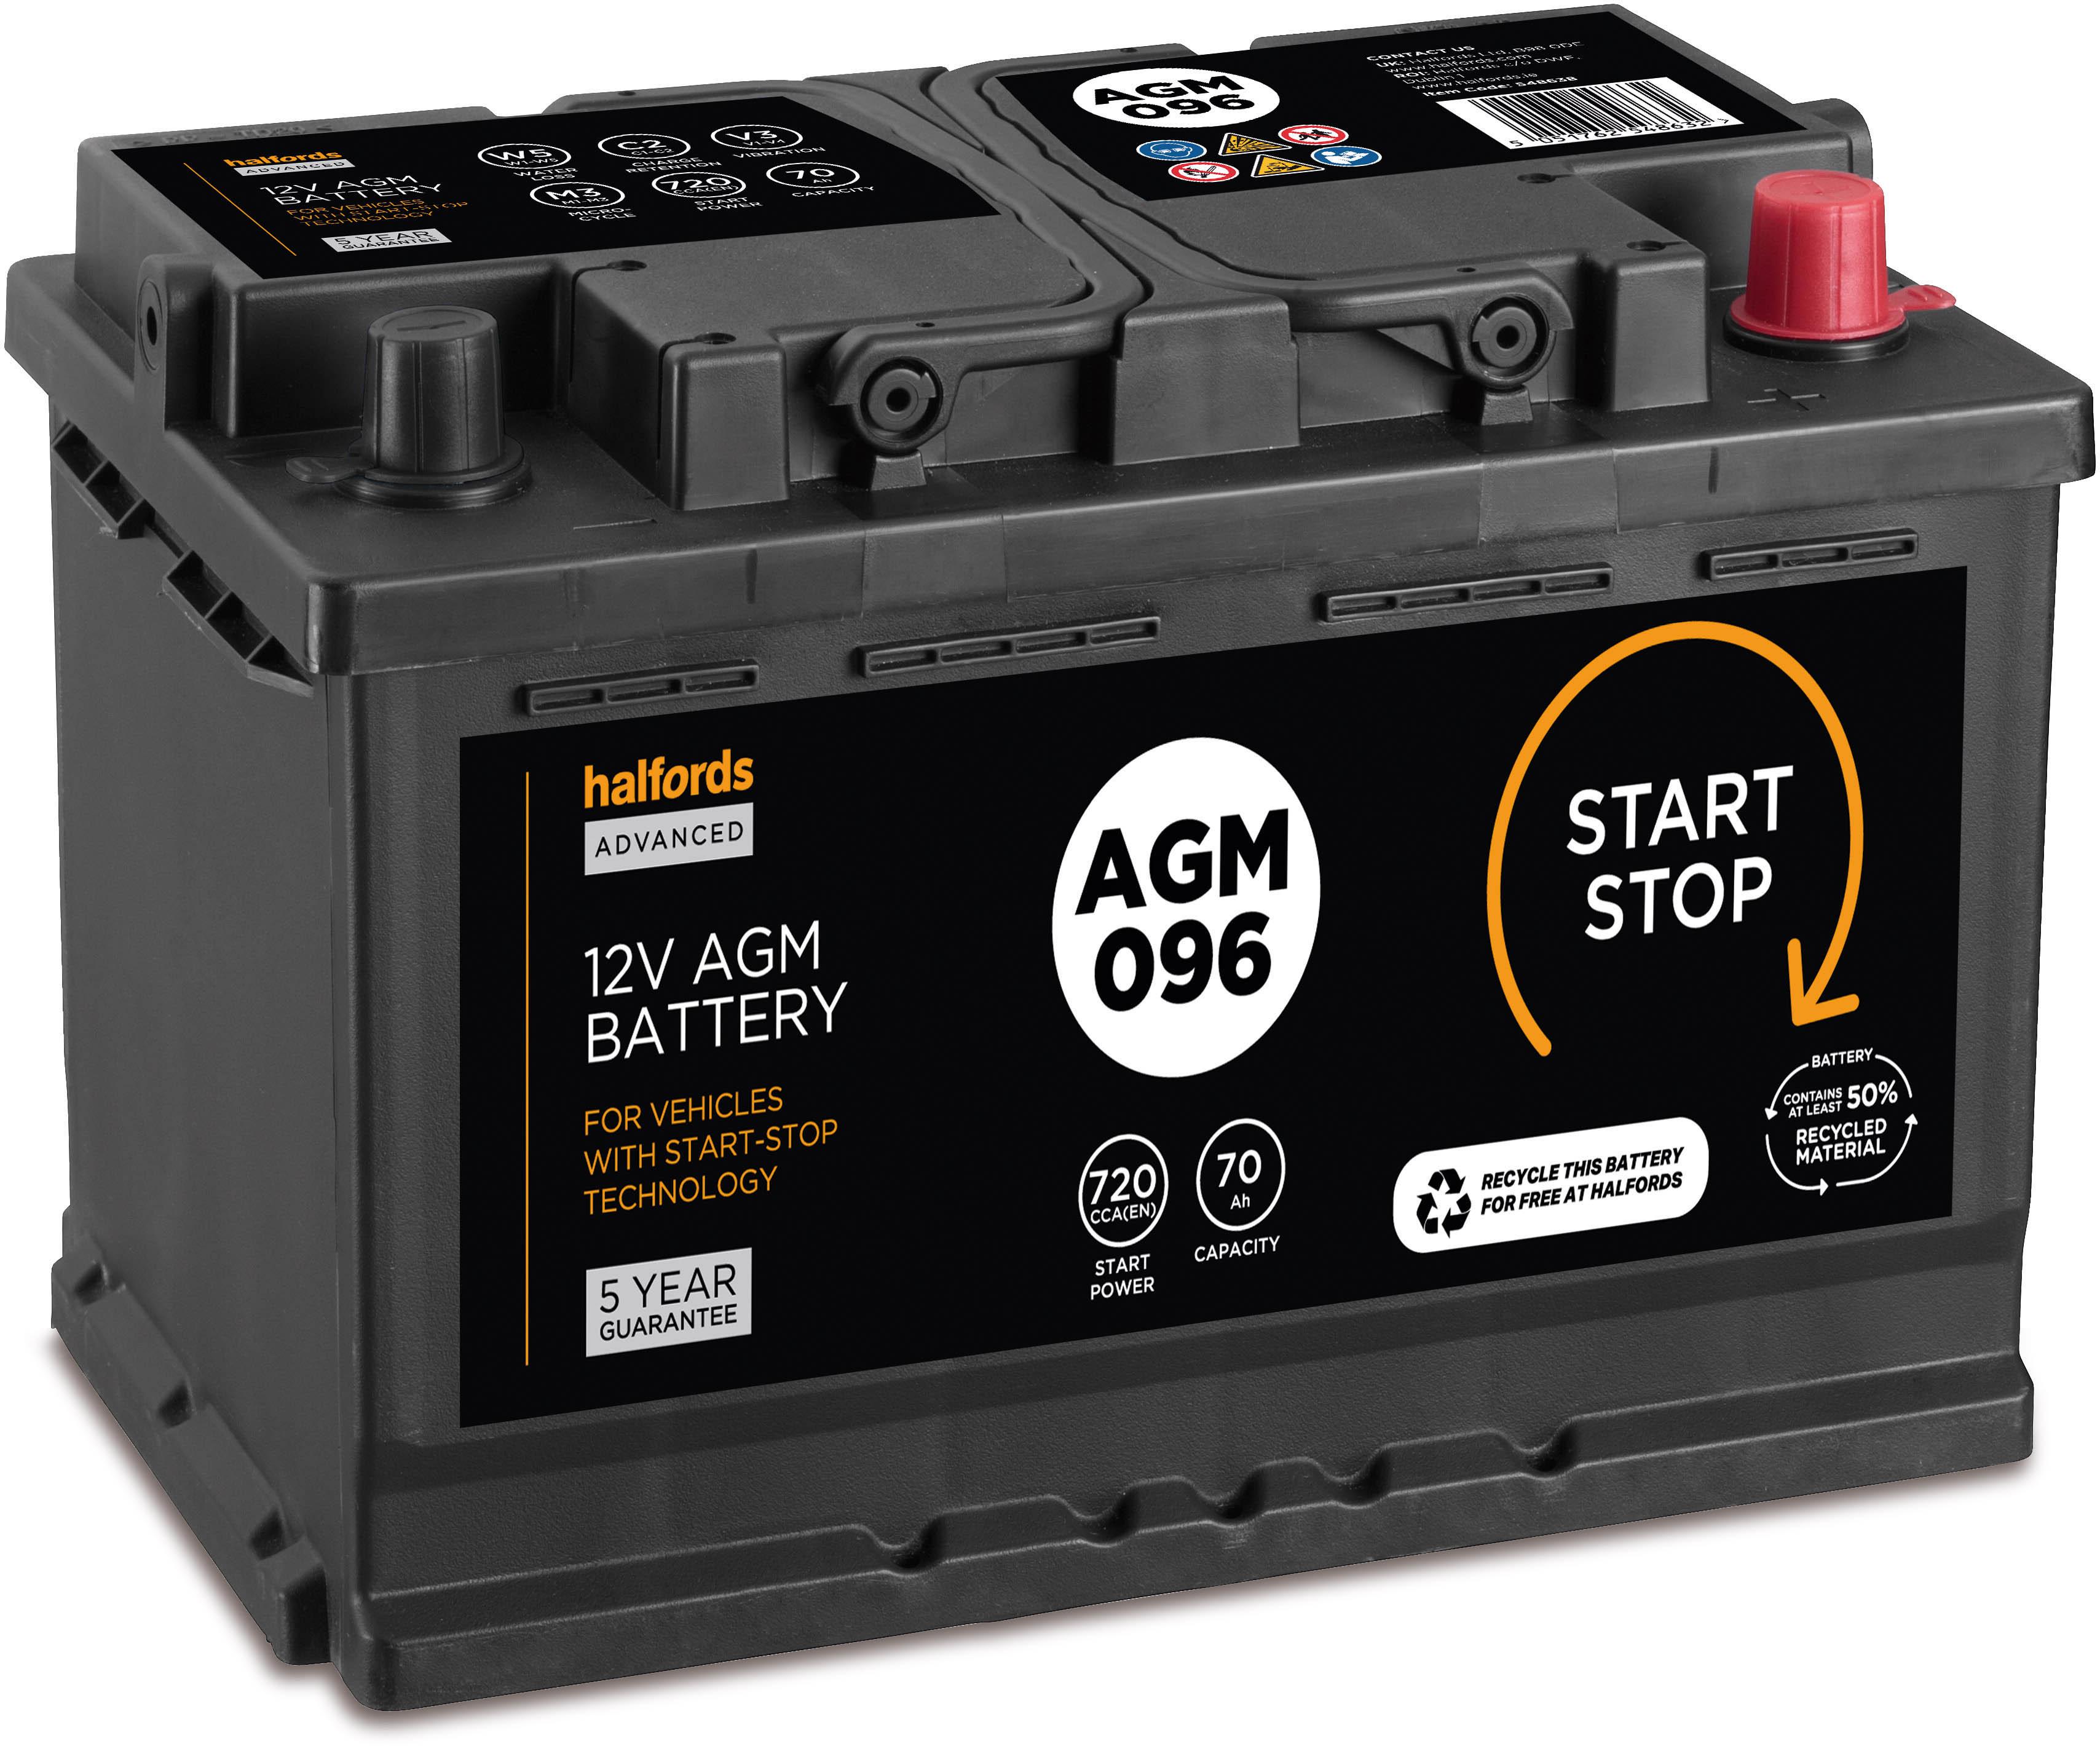 Autobatterie Bosch S5A08 Start-Stop 12V 70Ah 760A AGM